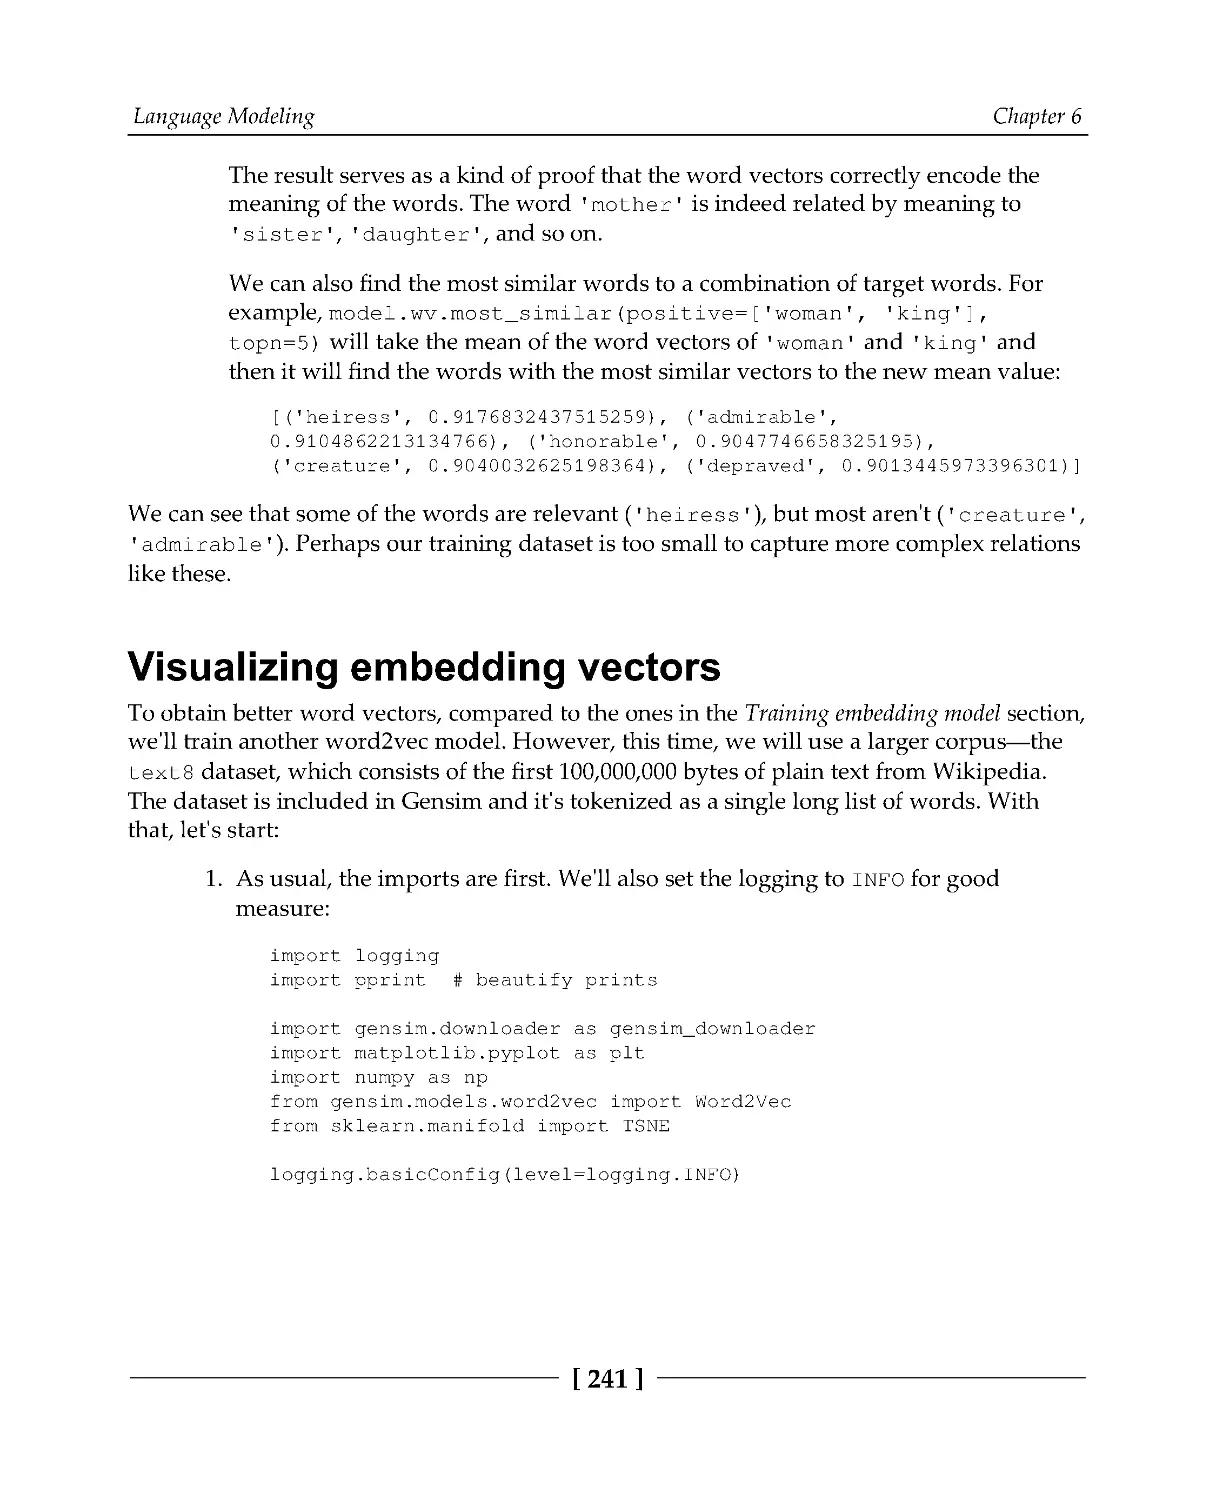 Visualizing embedding vectors